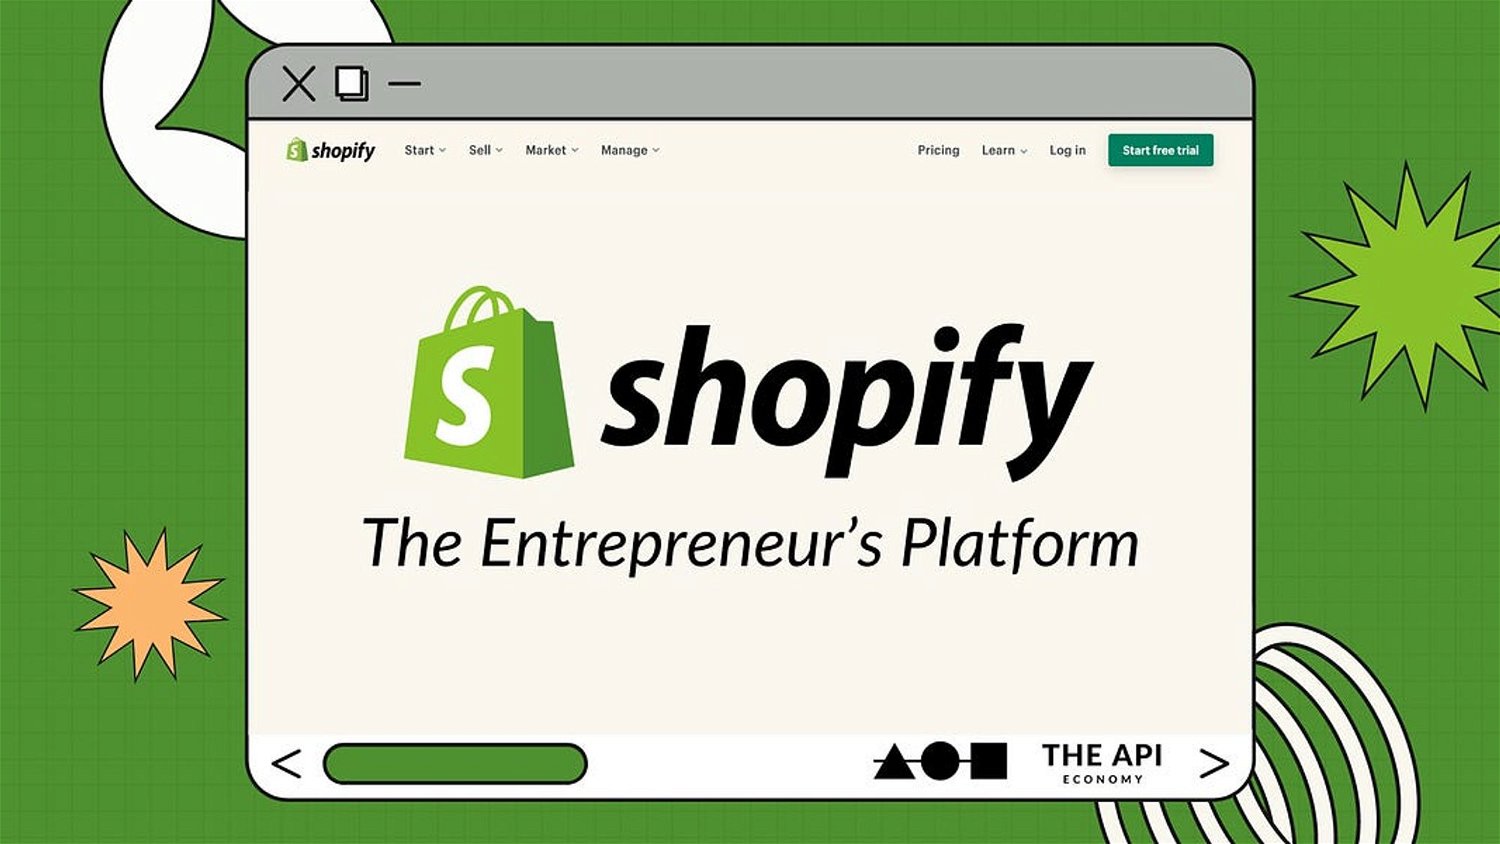 Shopify: The Entrepreneur's Platform